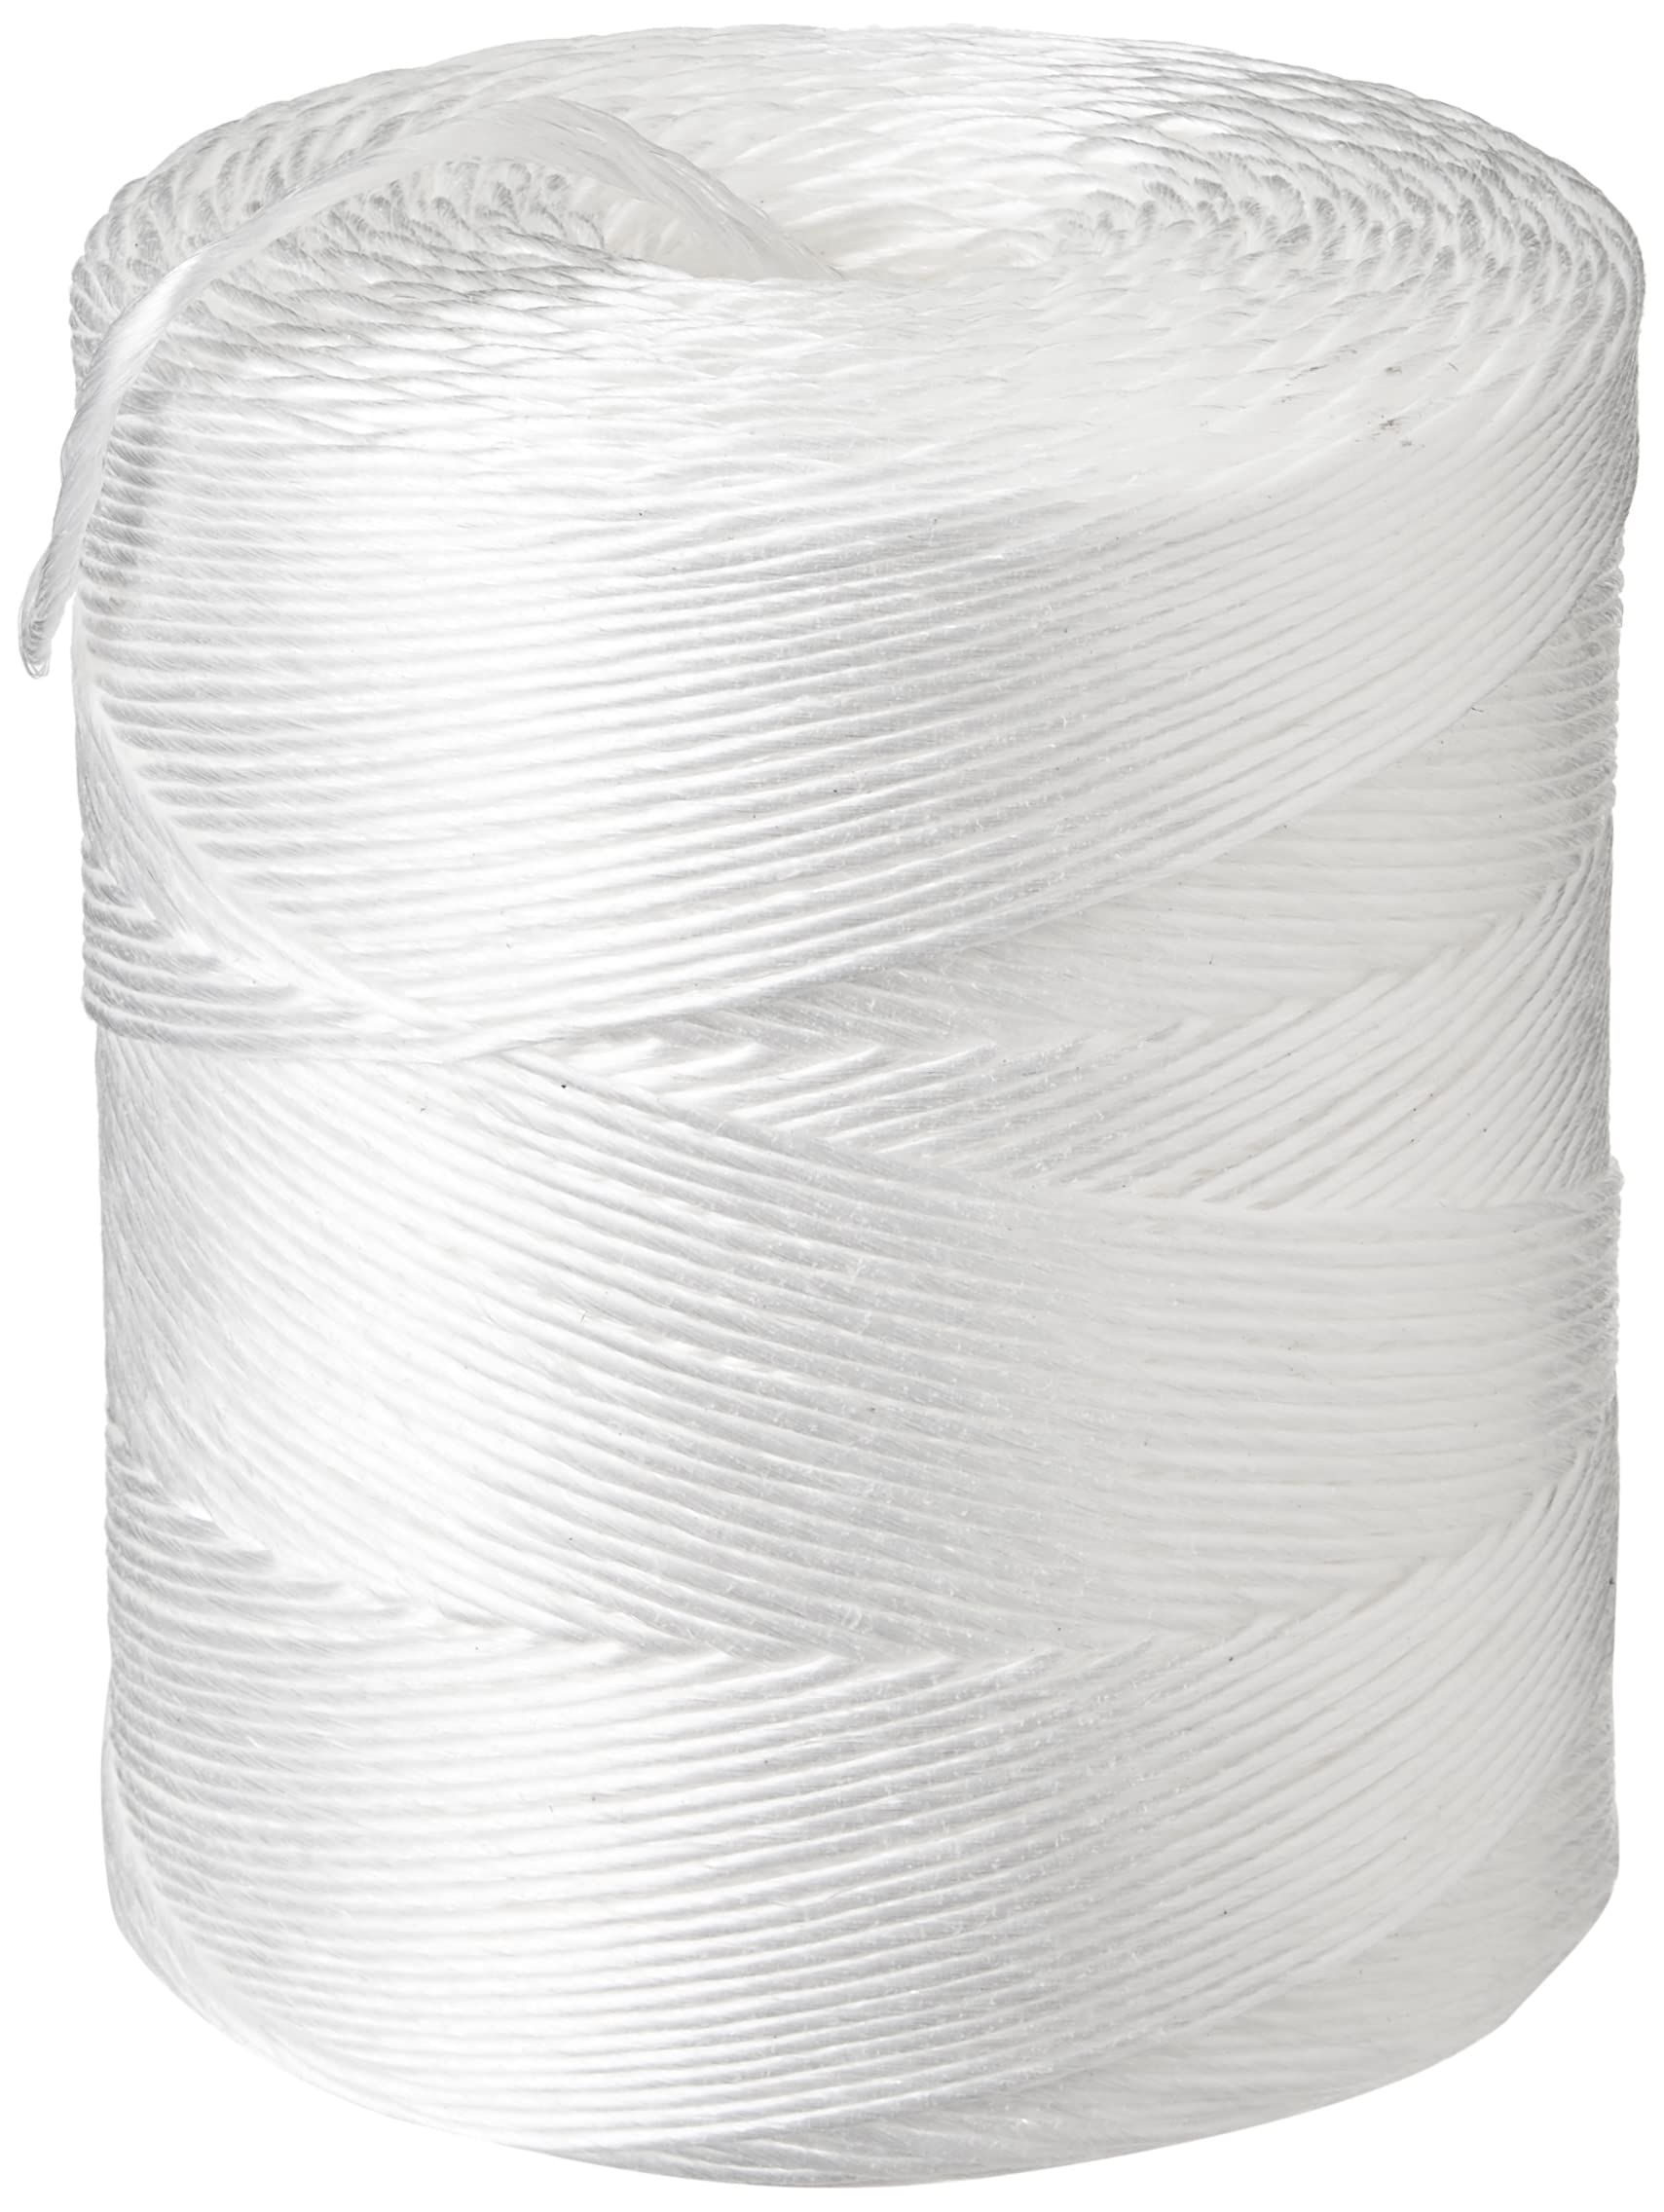 Шпагат из полипропилена Kraftcom, 3мм х 50м (1шт), цвет - белый бант шар 5